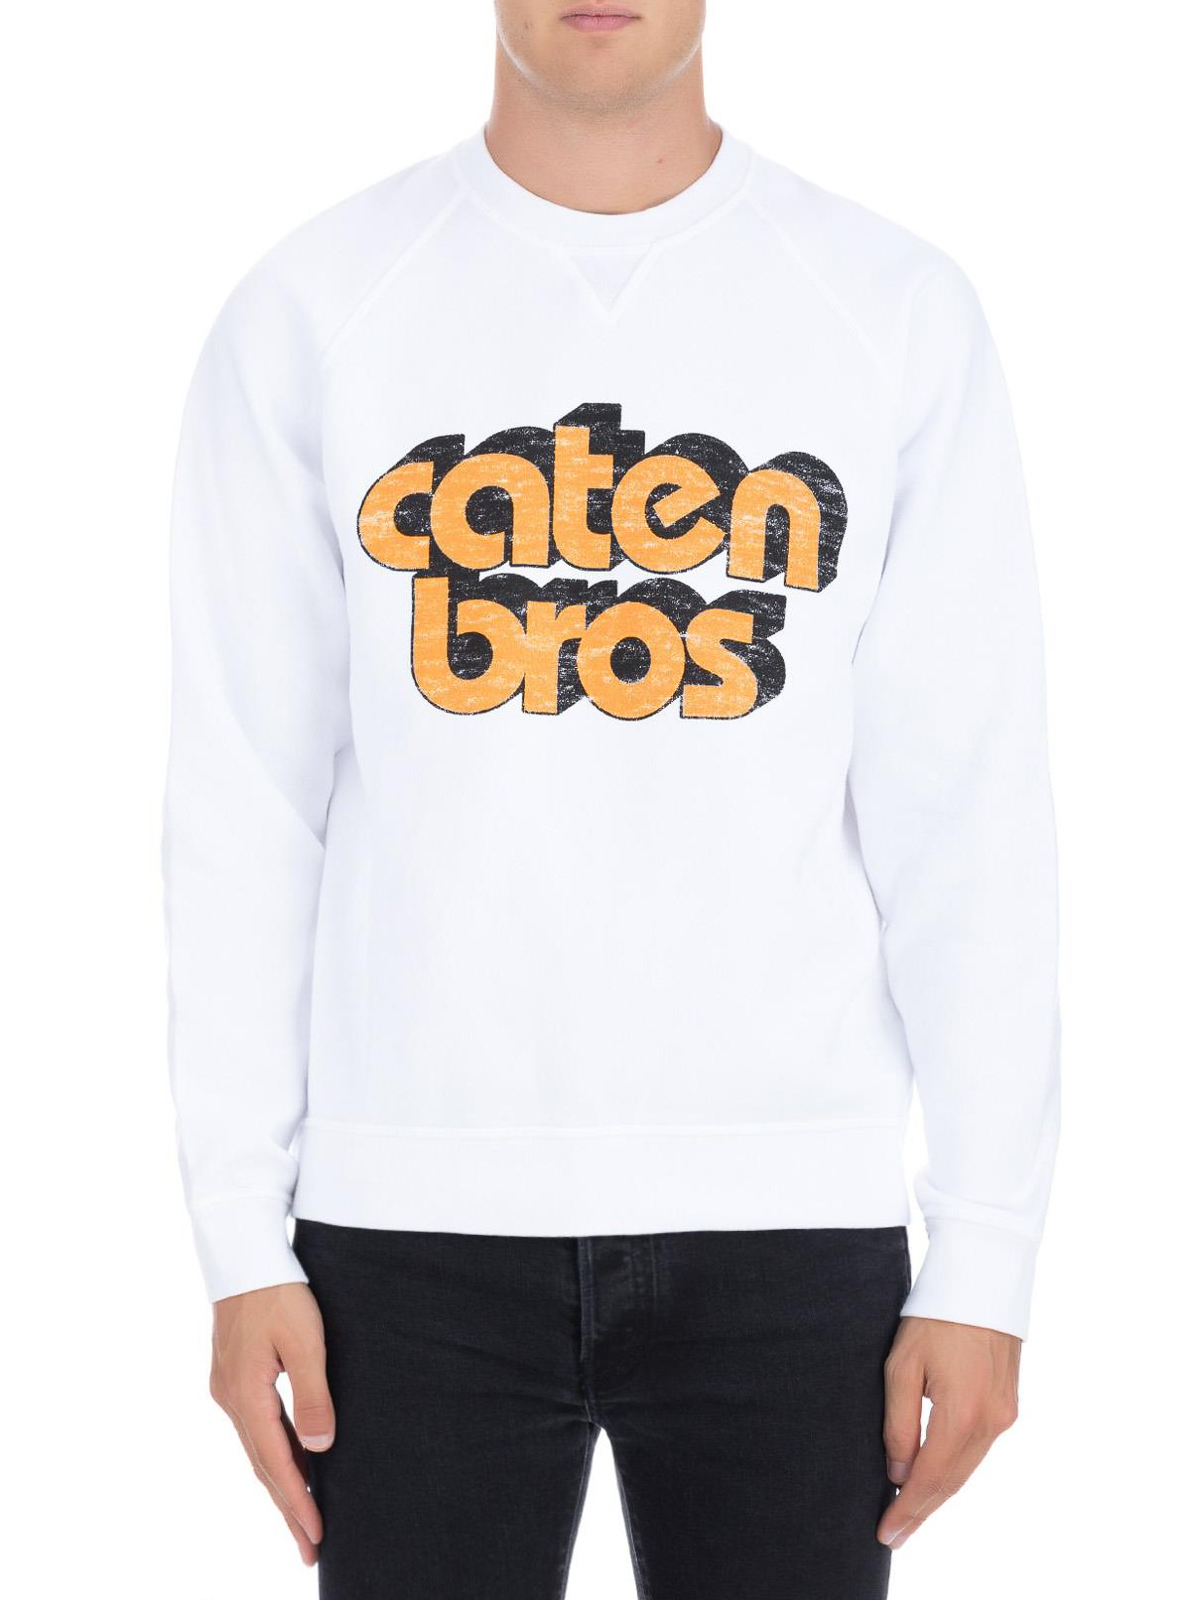 dsquared2 caten bros sweatshirt